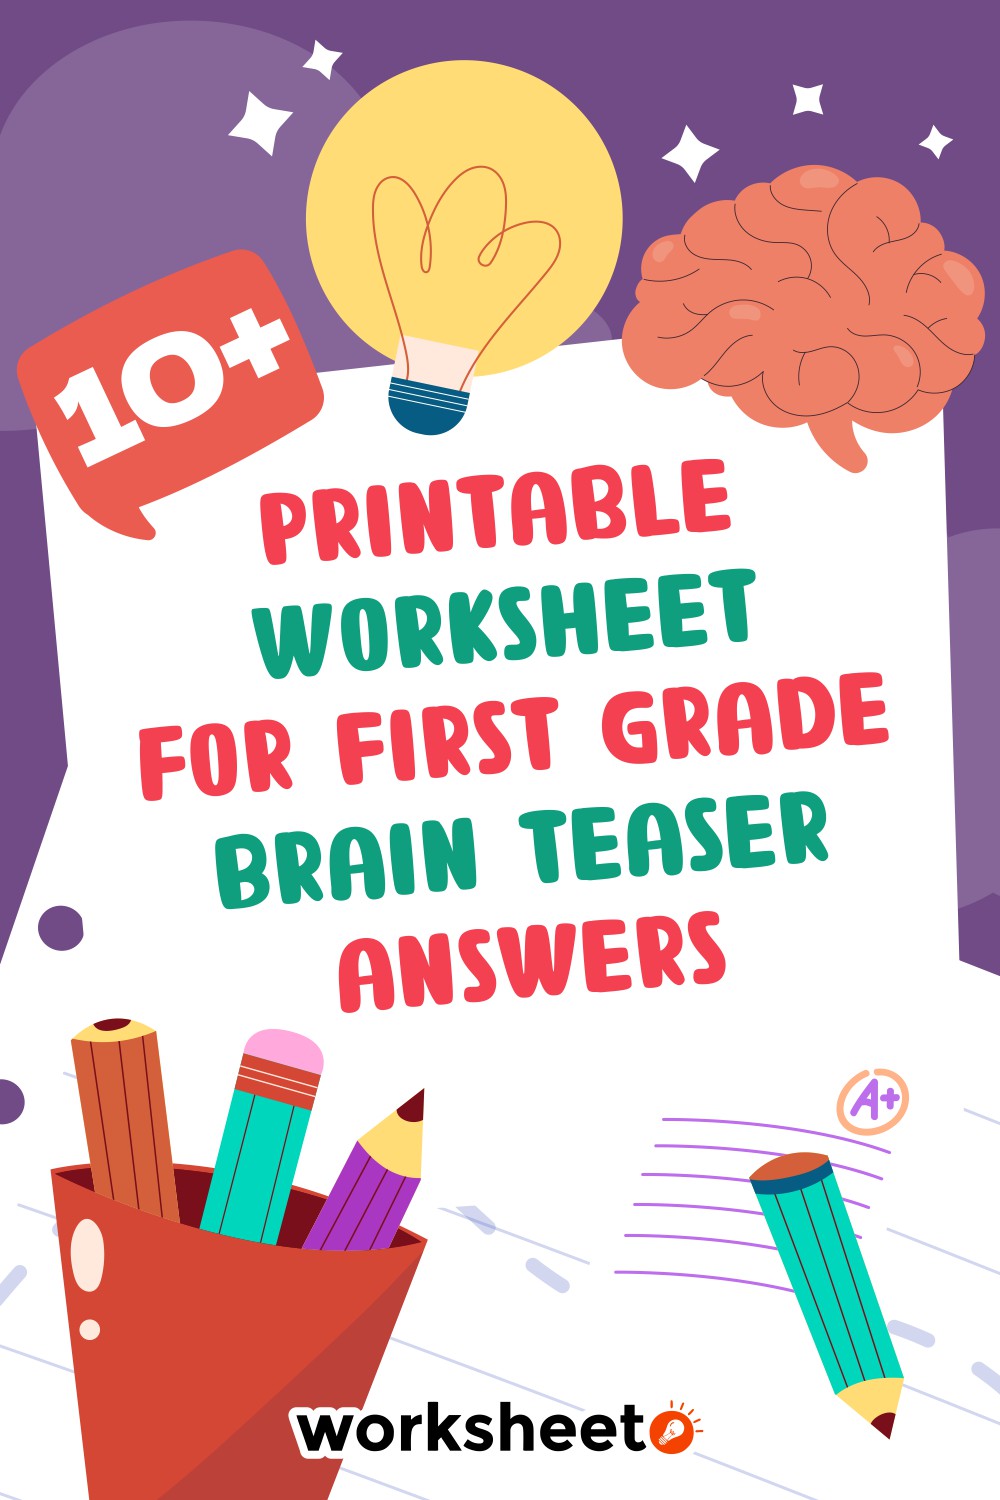 Printable Worksheet for First Grade Brain Teaser Answers